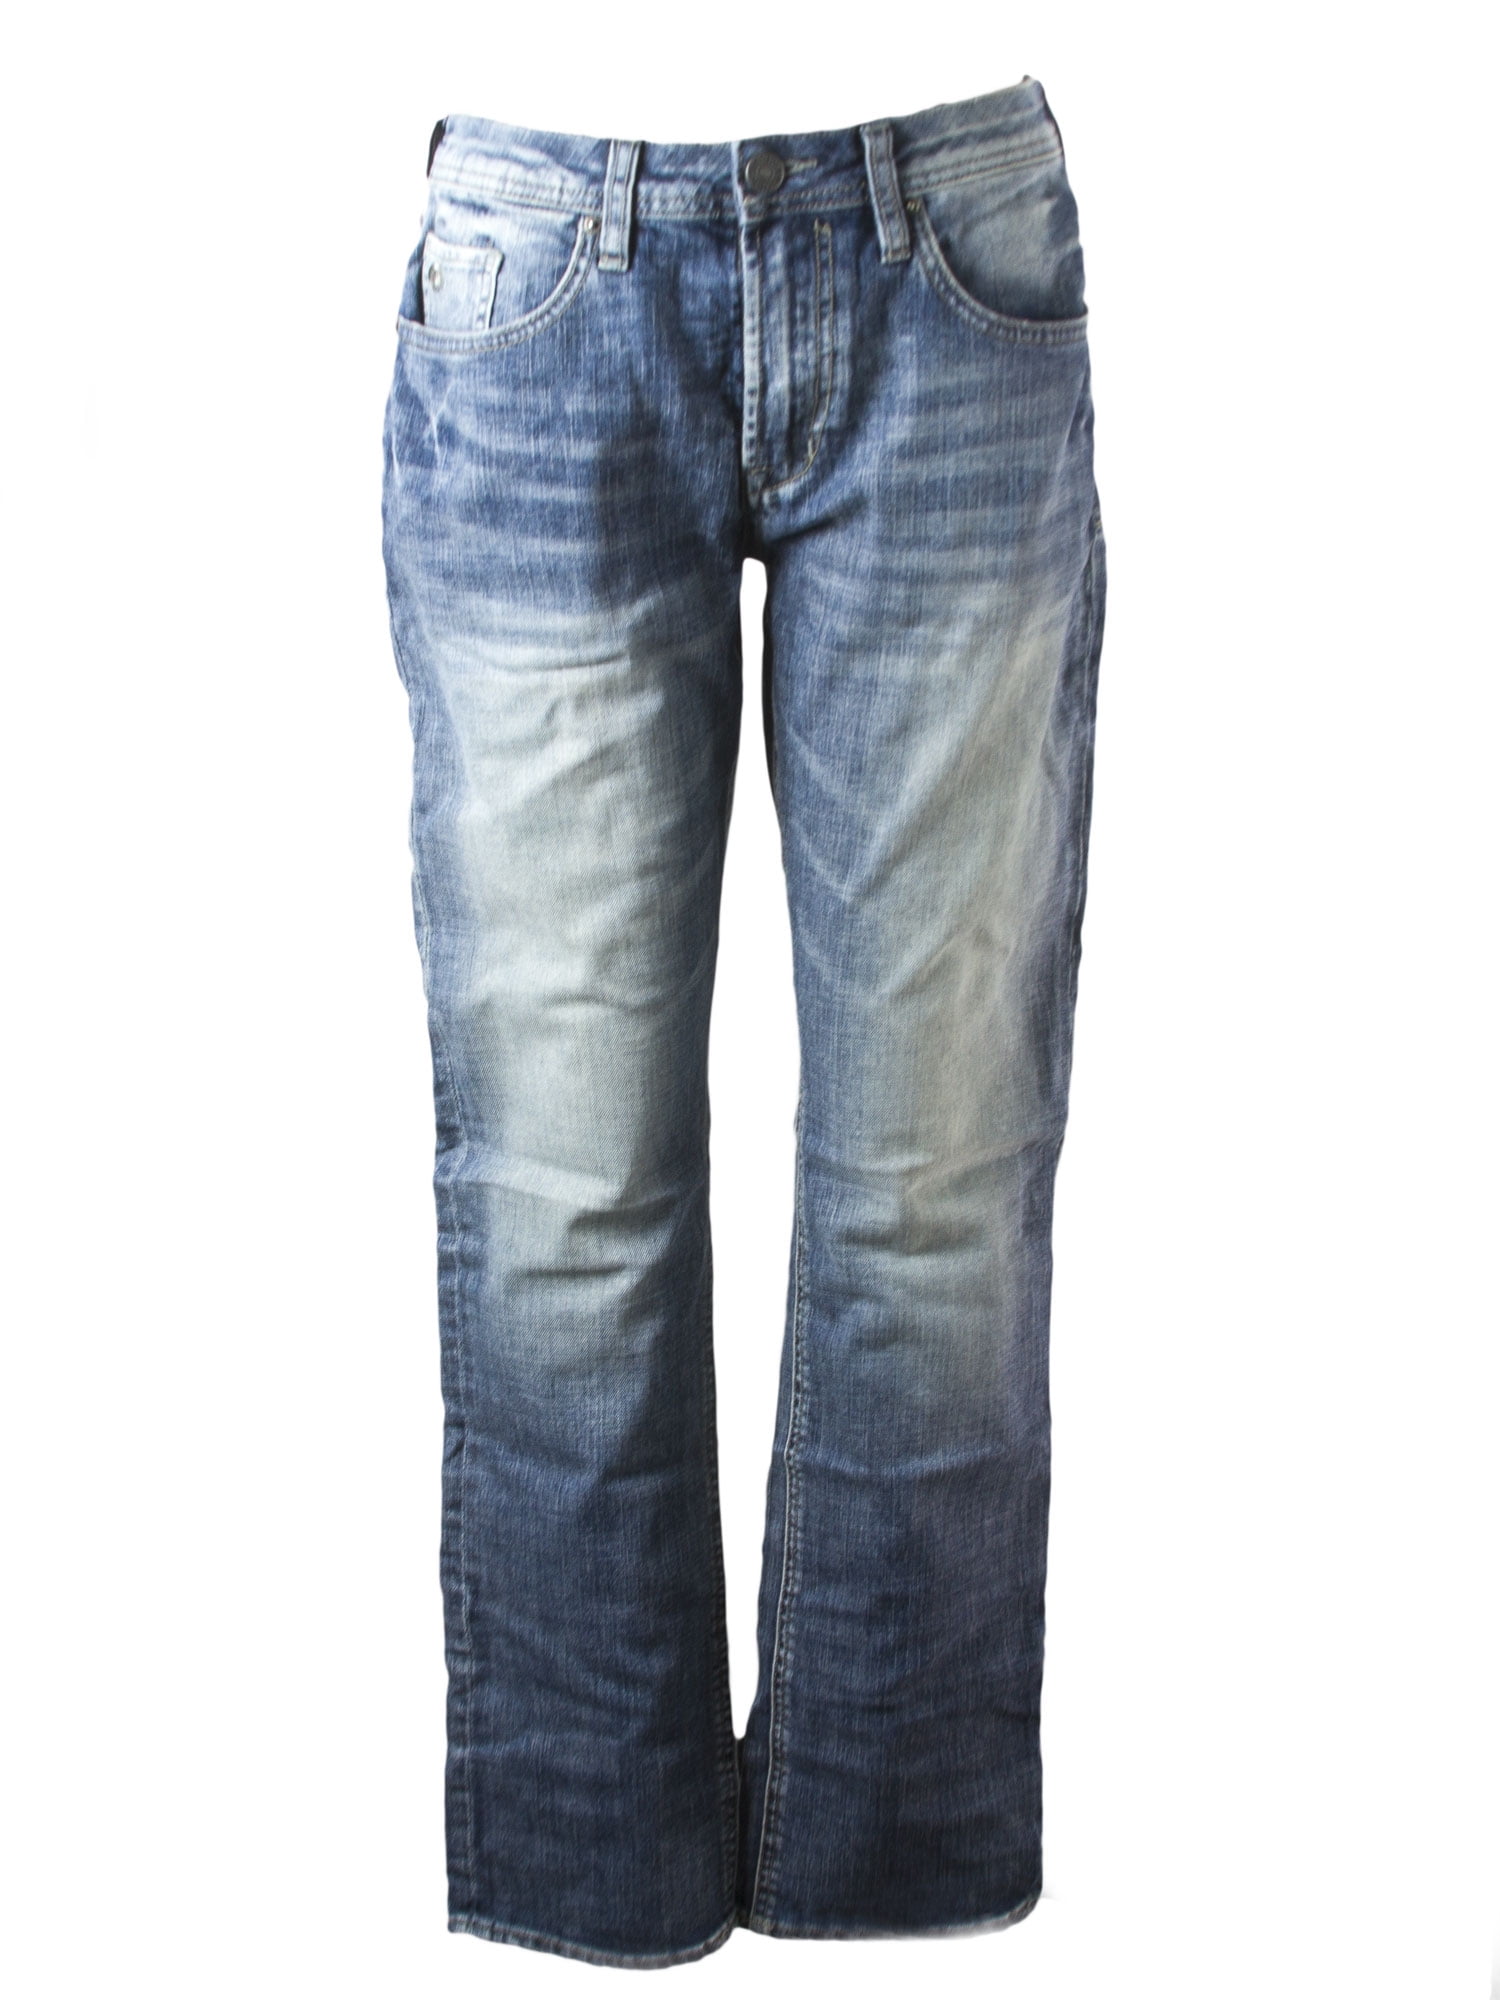 Buffalo David Bitton Men's Ash-X Slim Stretch Denim Jeans BM20477, 30x32 - Walmart.com